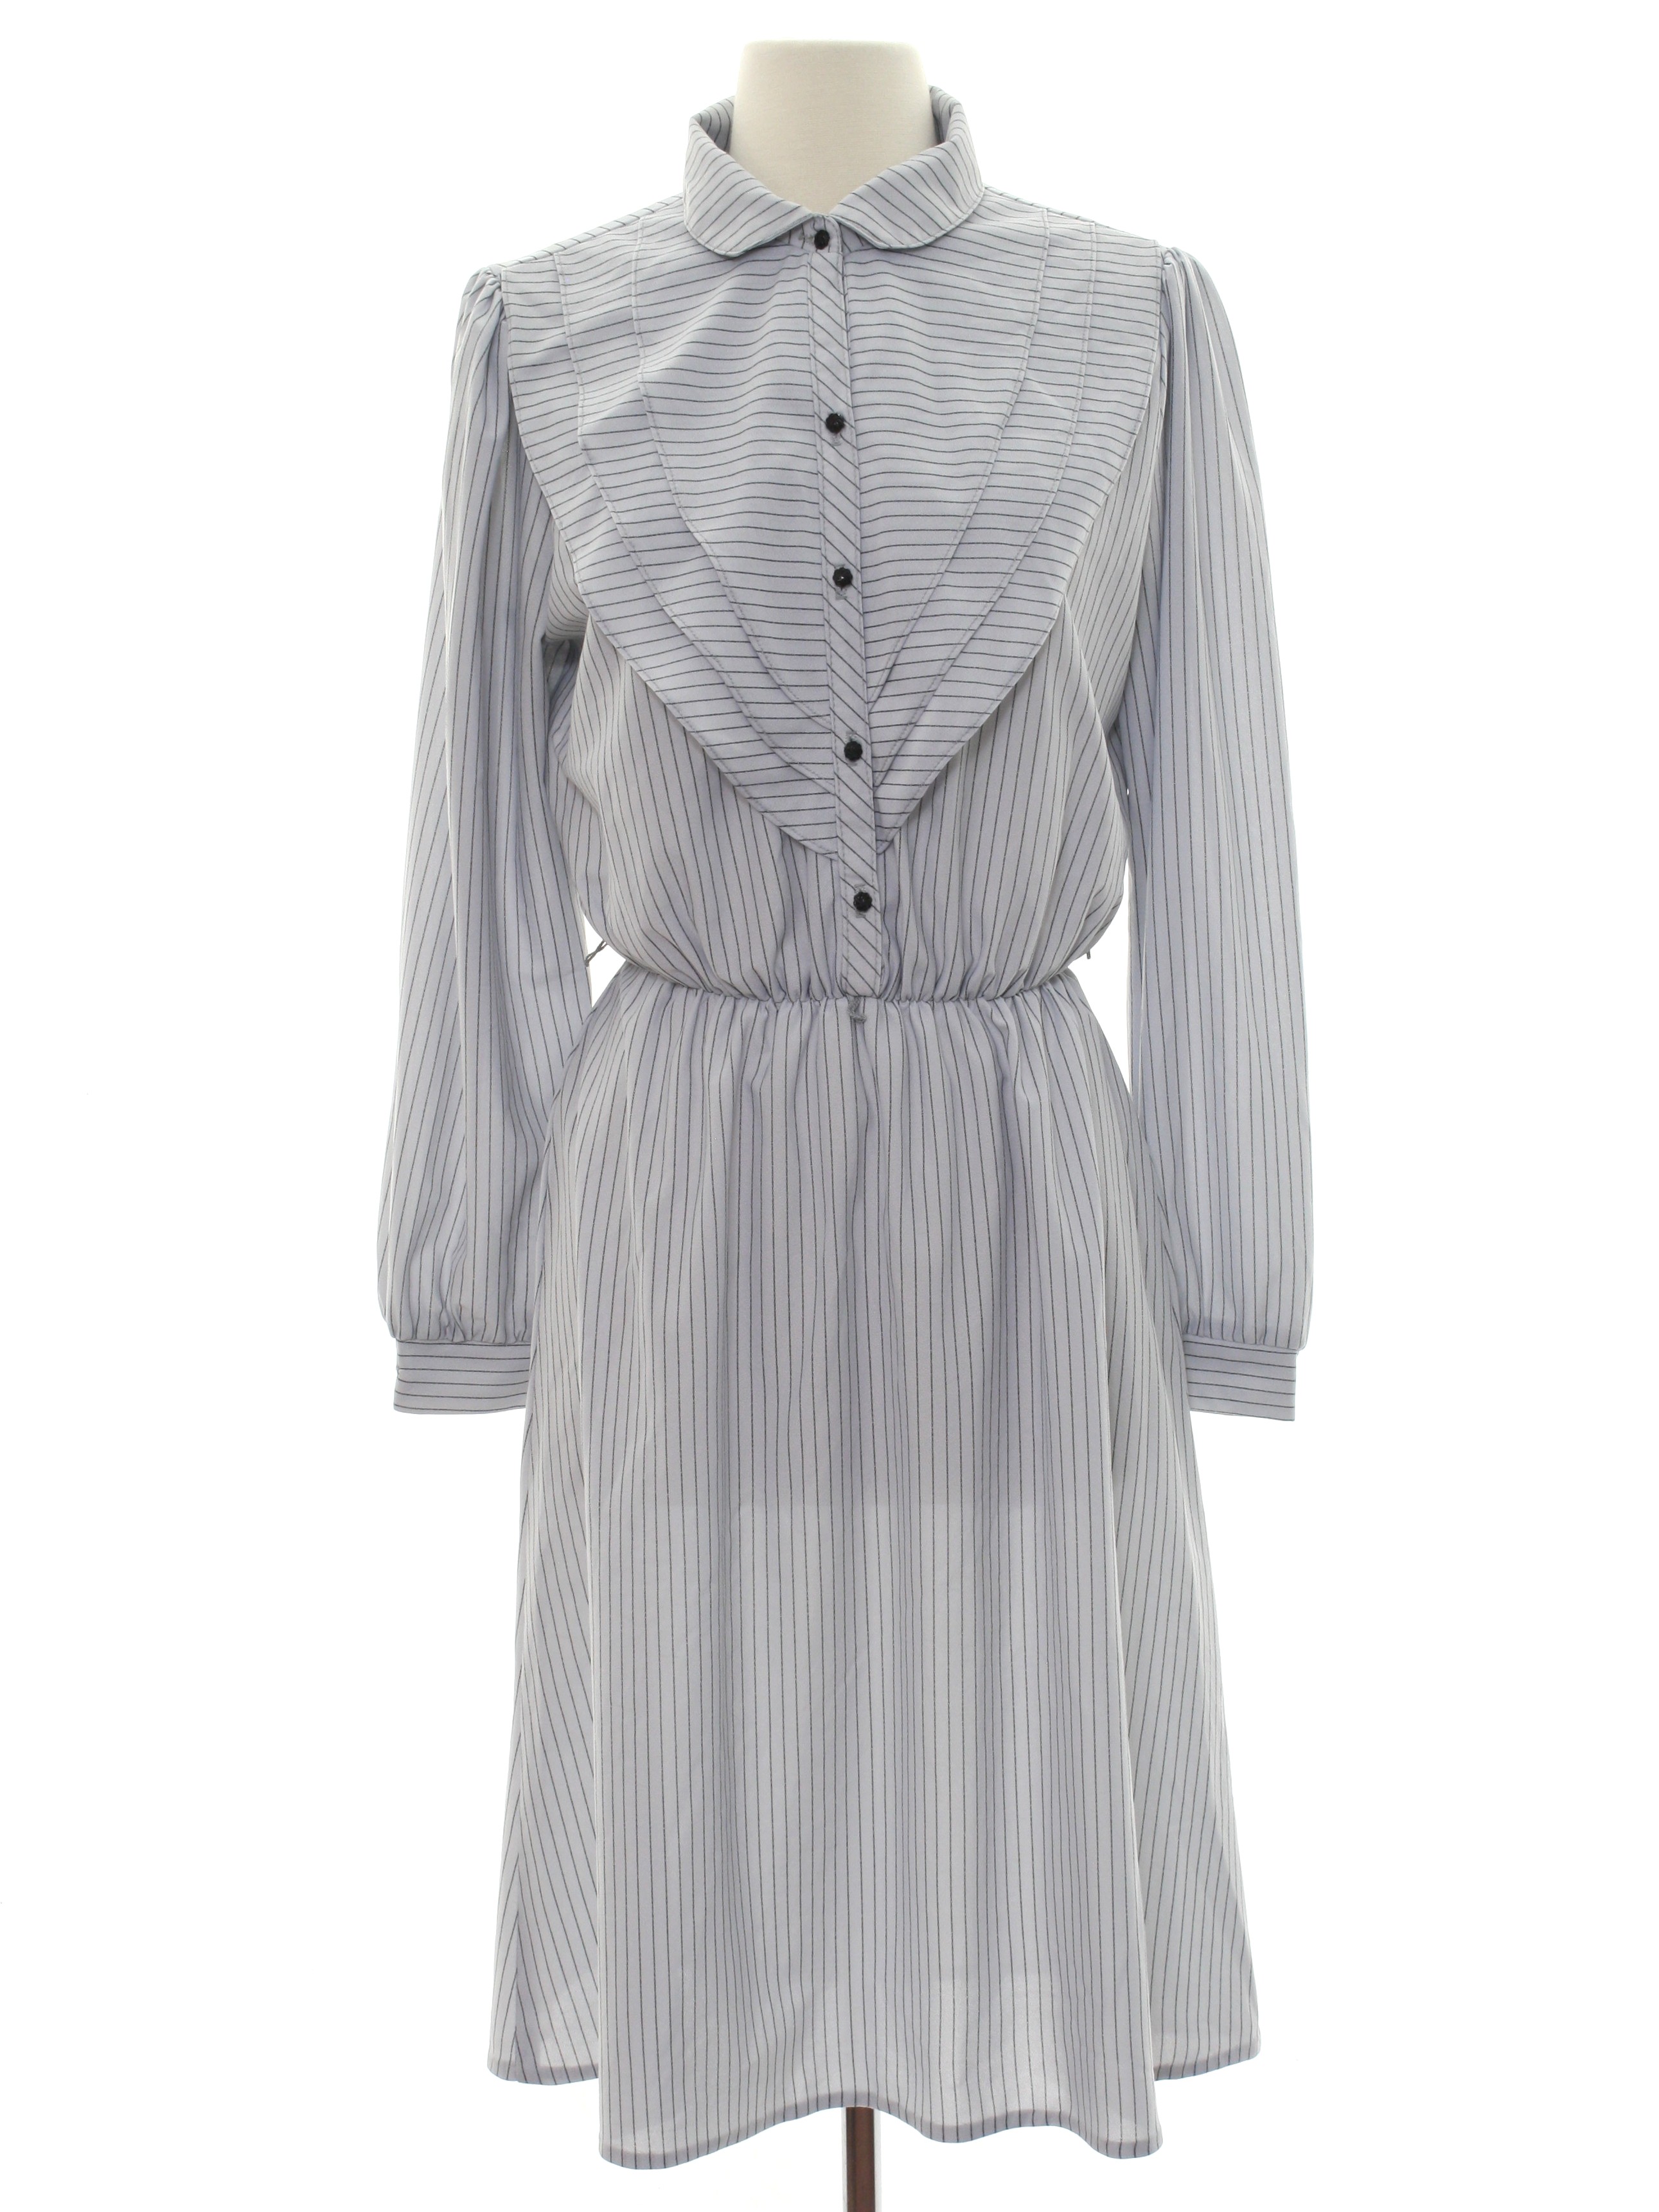 Retro 1980's Dress (Sears) : 80s -Sears- Womens light grey and black ...